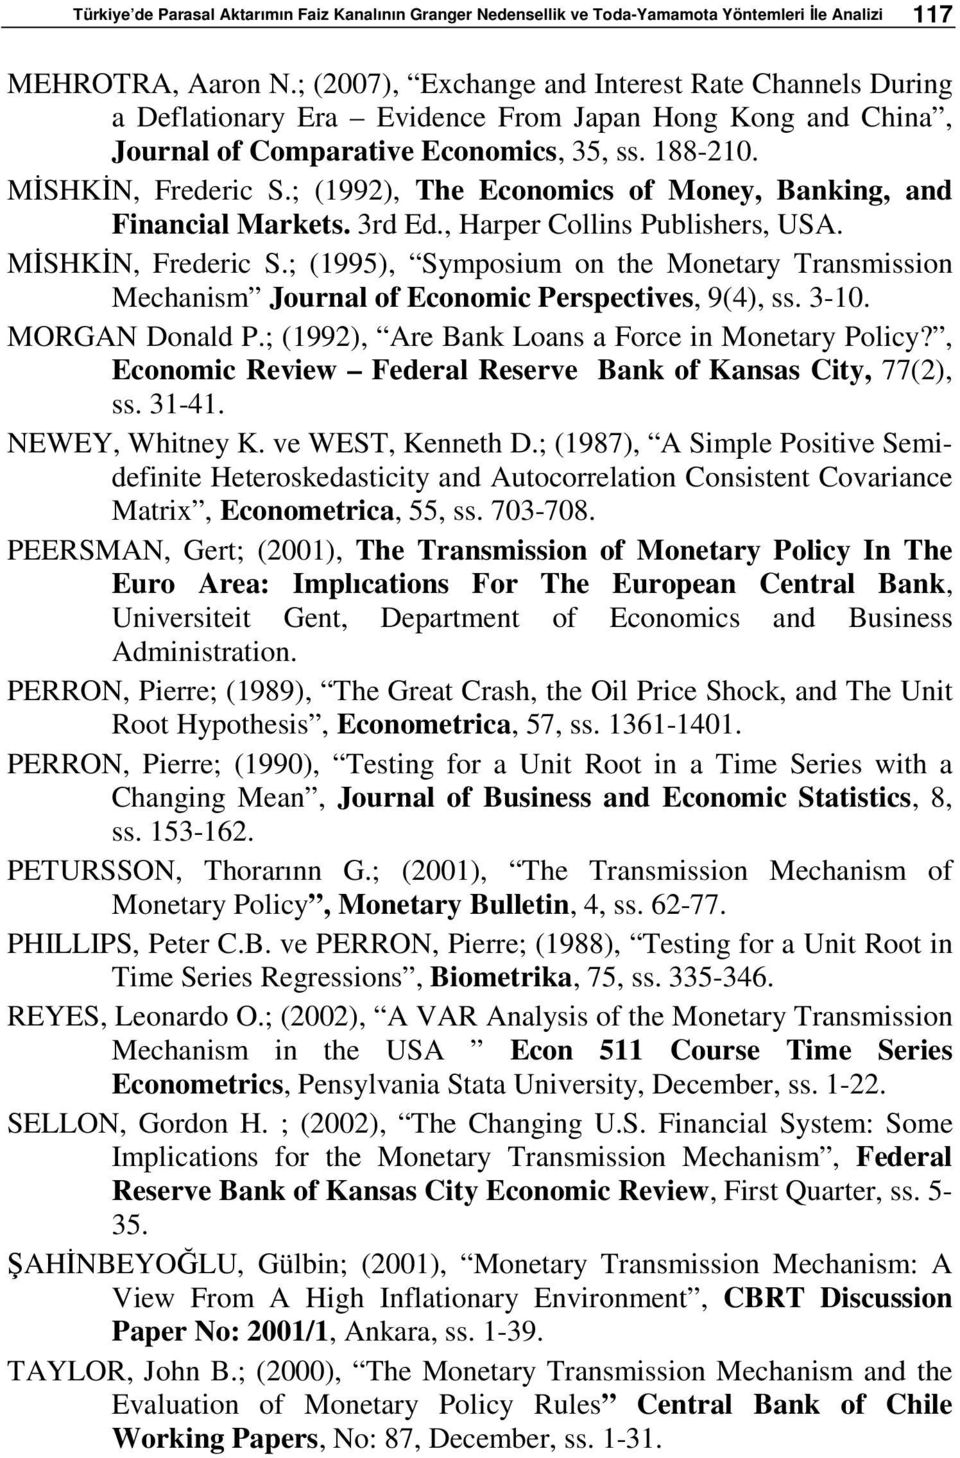 Harr ollns Publshrs US. MİSHKİN Frrc S.; (995) Smosum on h Monar Transmsson Mchansm Journal of Economc Prscvs 9(4) ss. 3-. MORGN Donal P.; (99) r an Loans a Forc n Monar Polc?